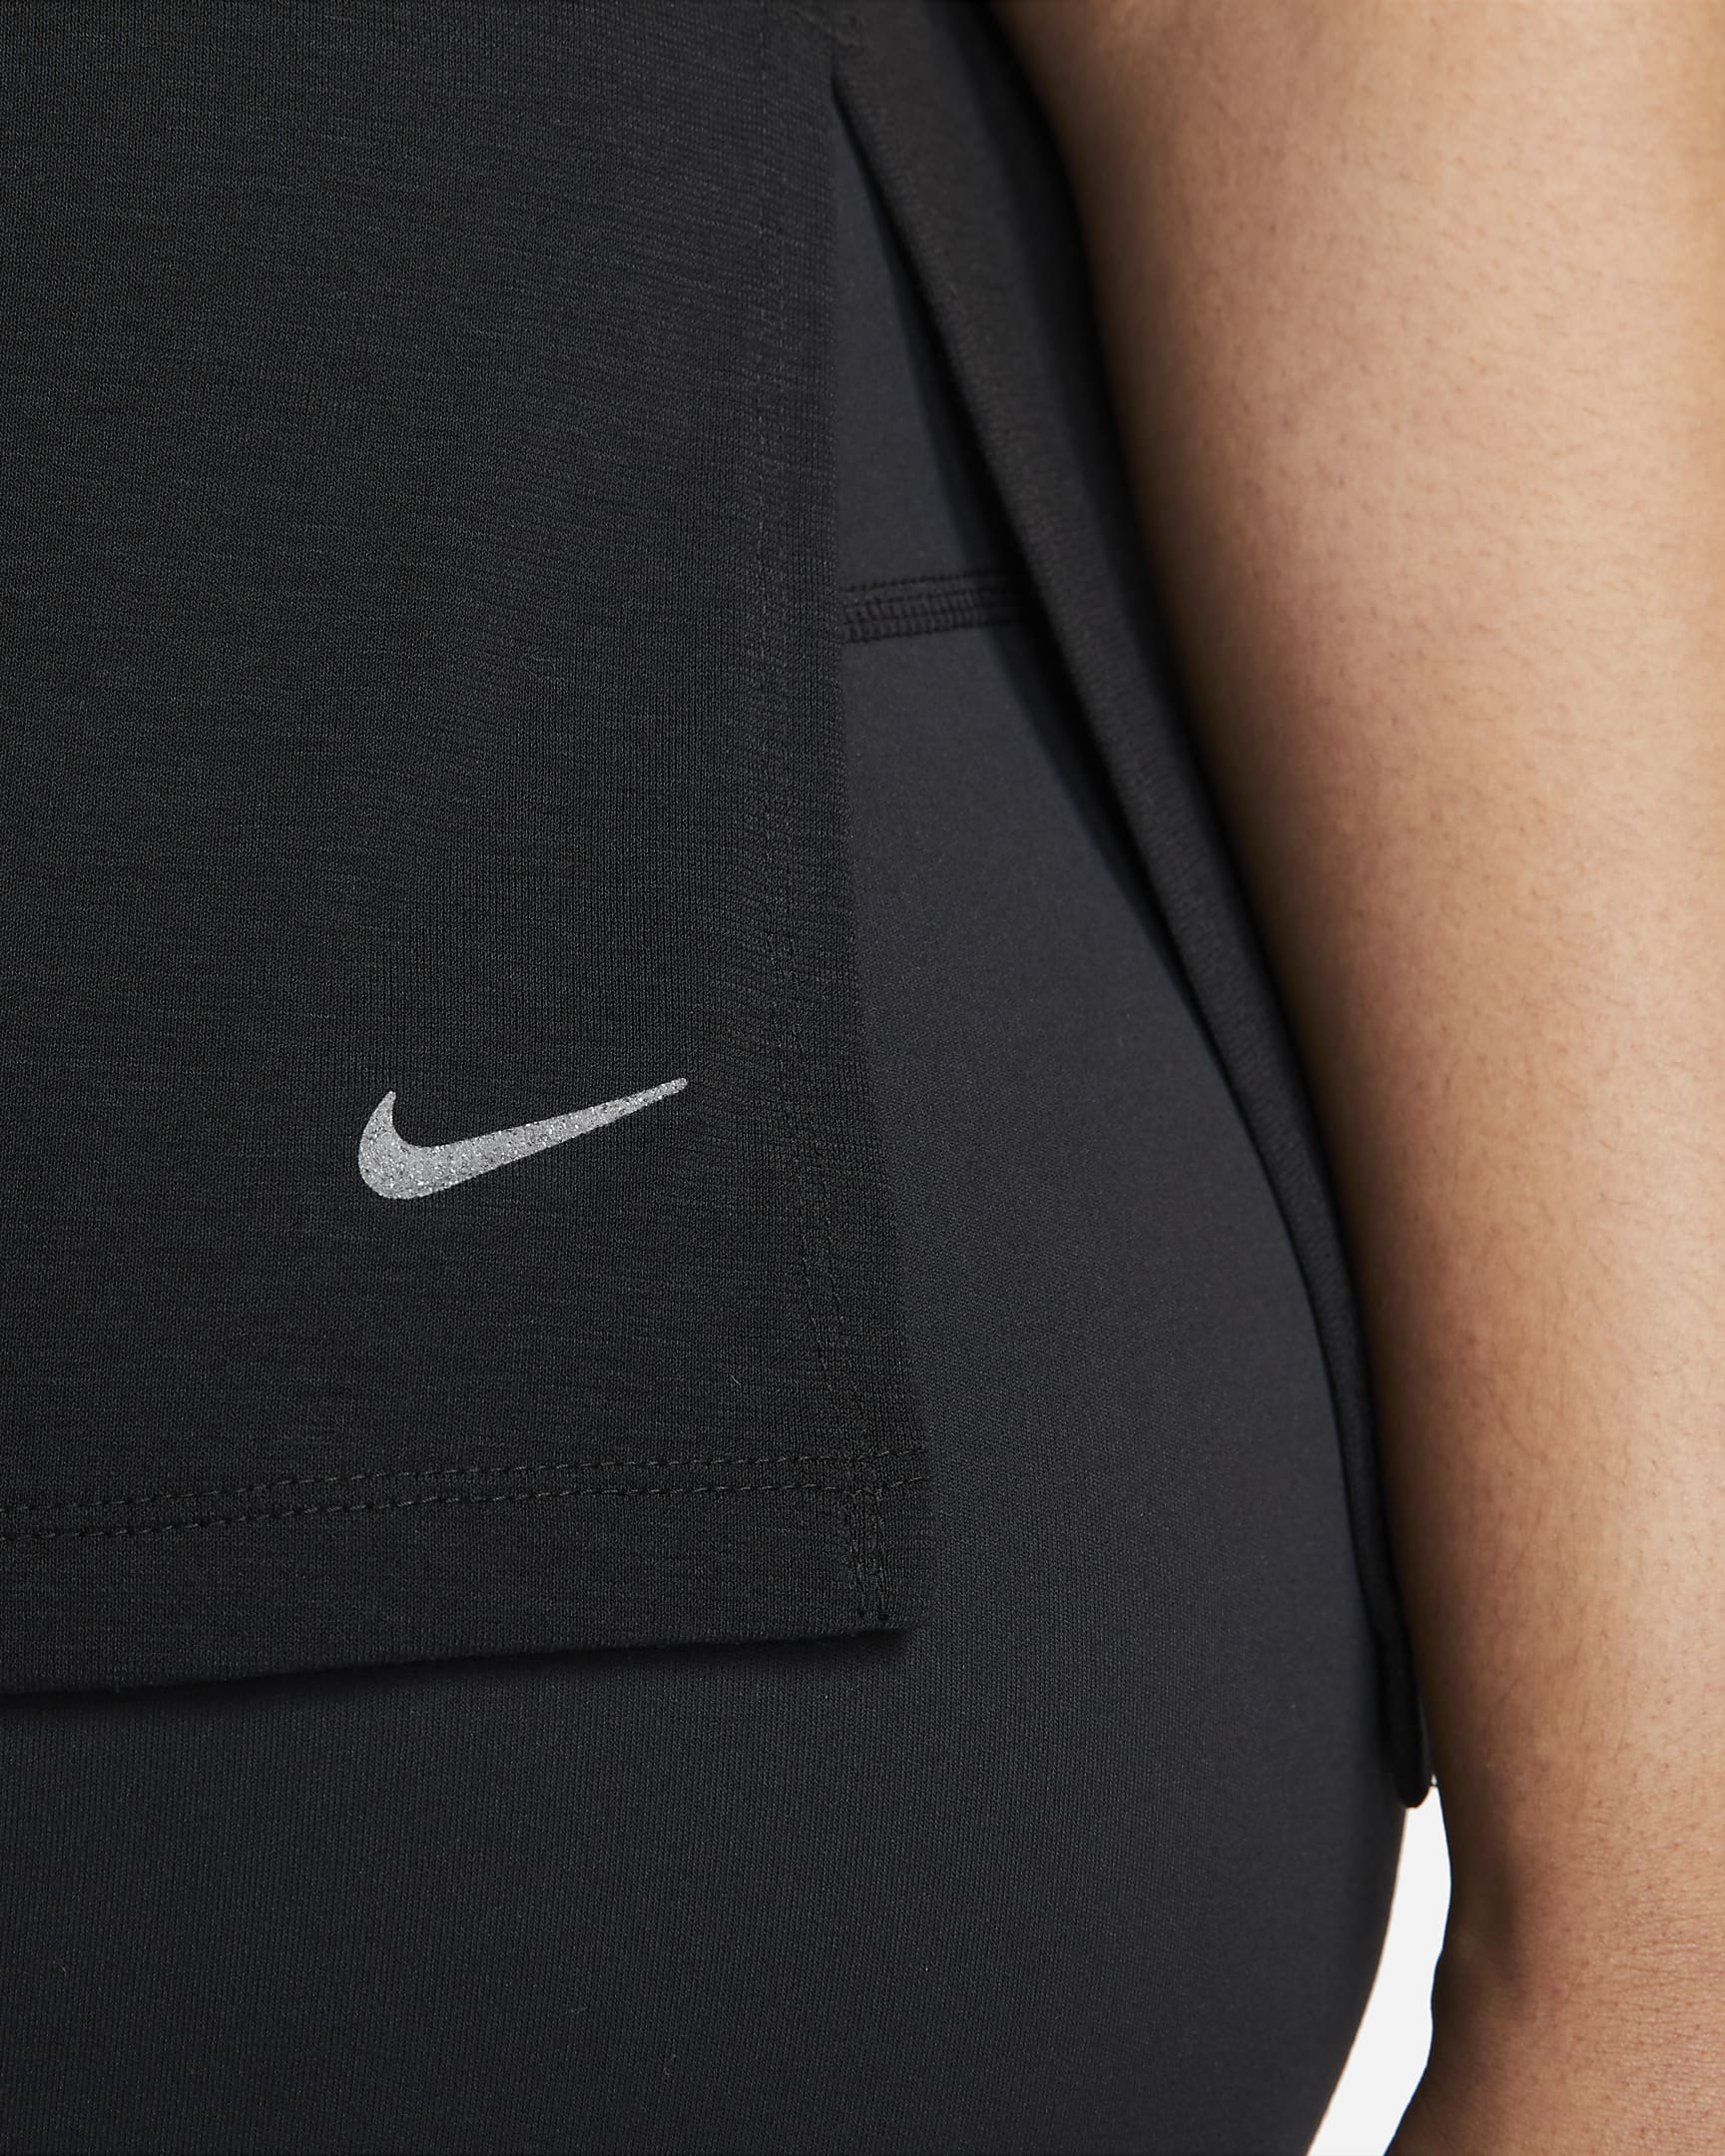 Nike Yoga Dri-FIT Women's Top (Plus Size) - Black/Iron Grey